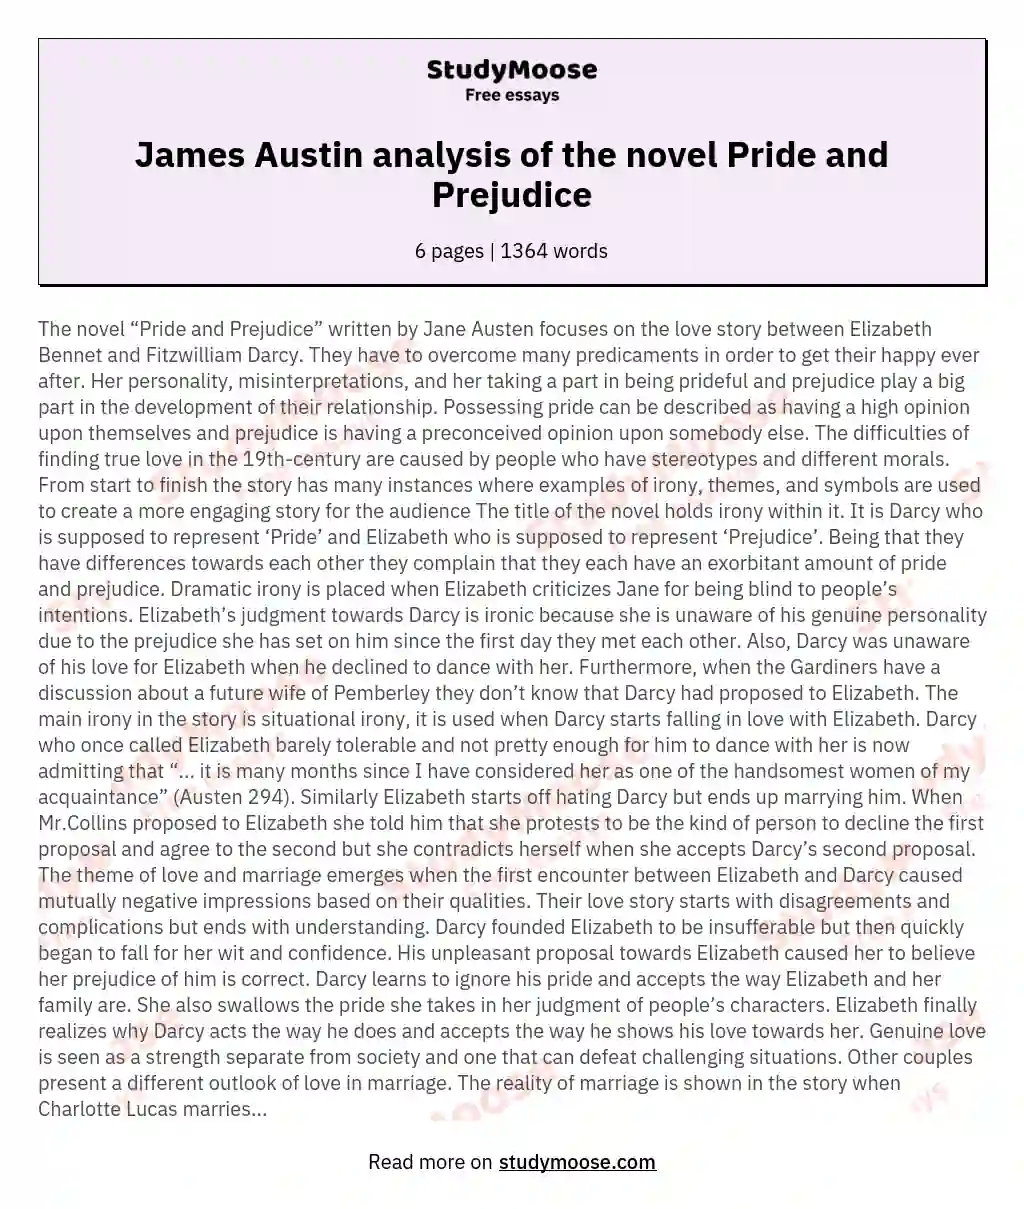 James Austin analysis of the novel Pride and Prejudice essay